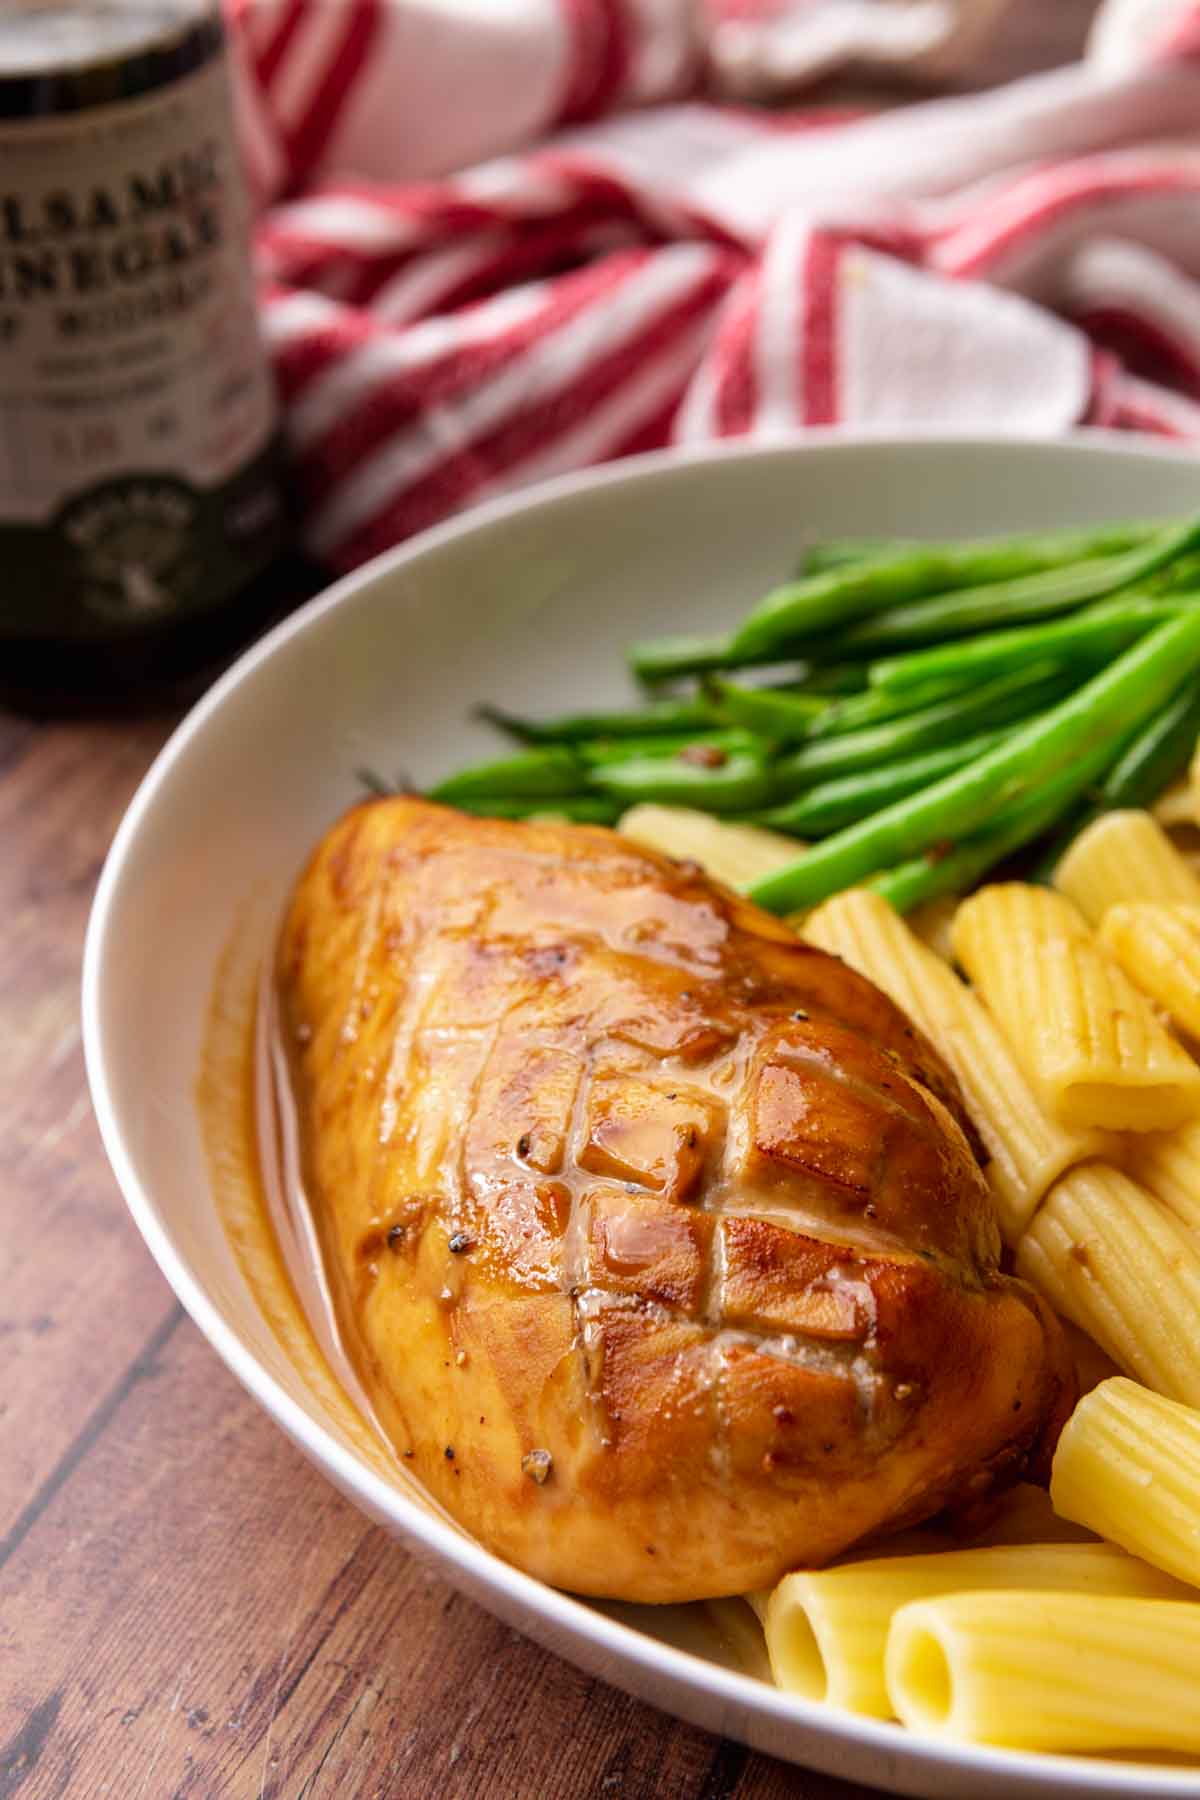 Balsamic Marinated Chicken Breasts Recipe